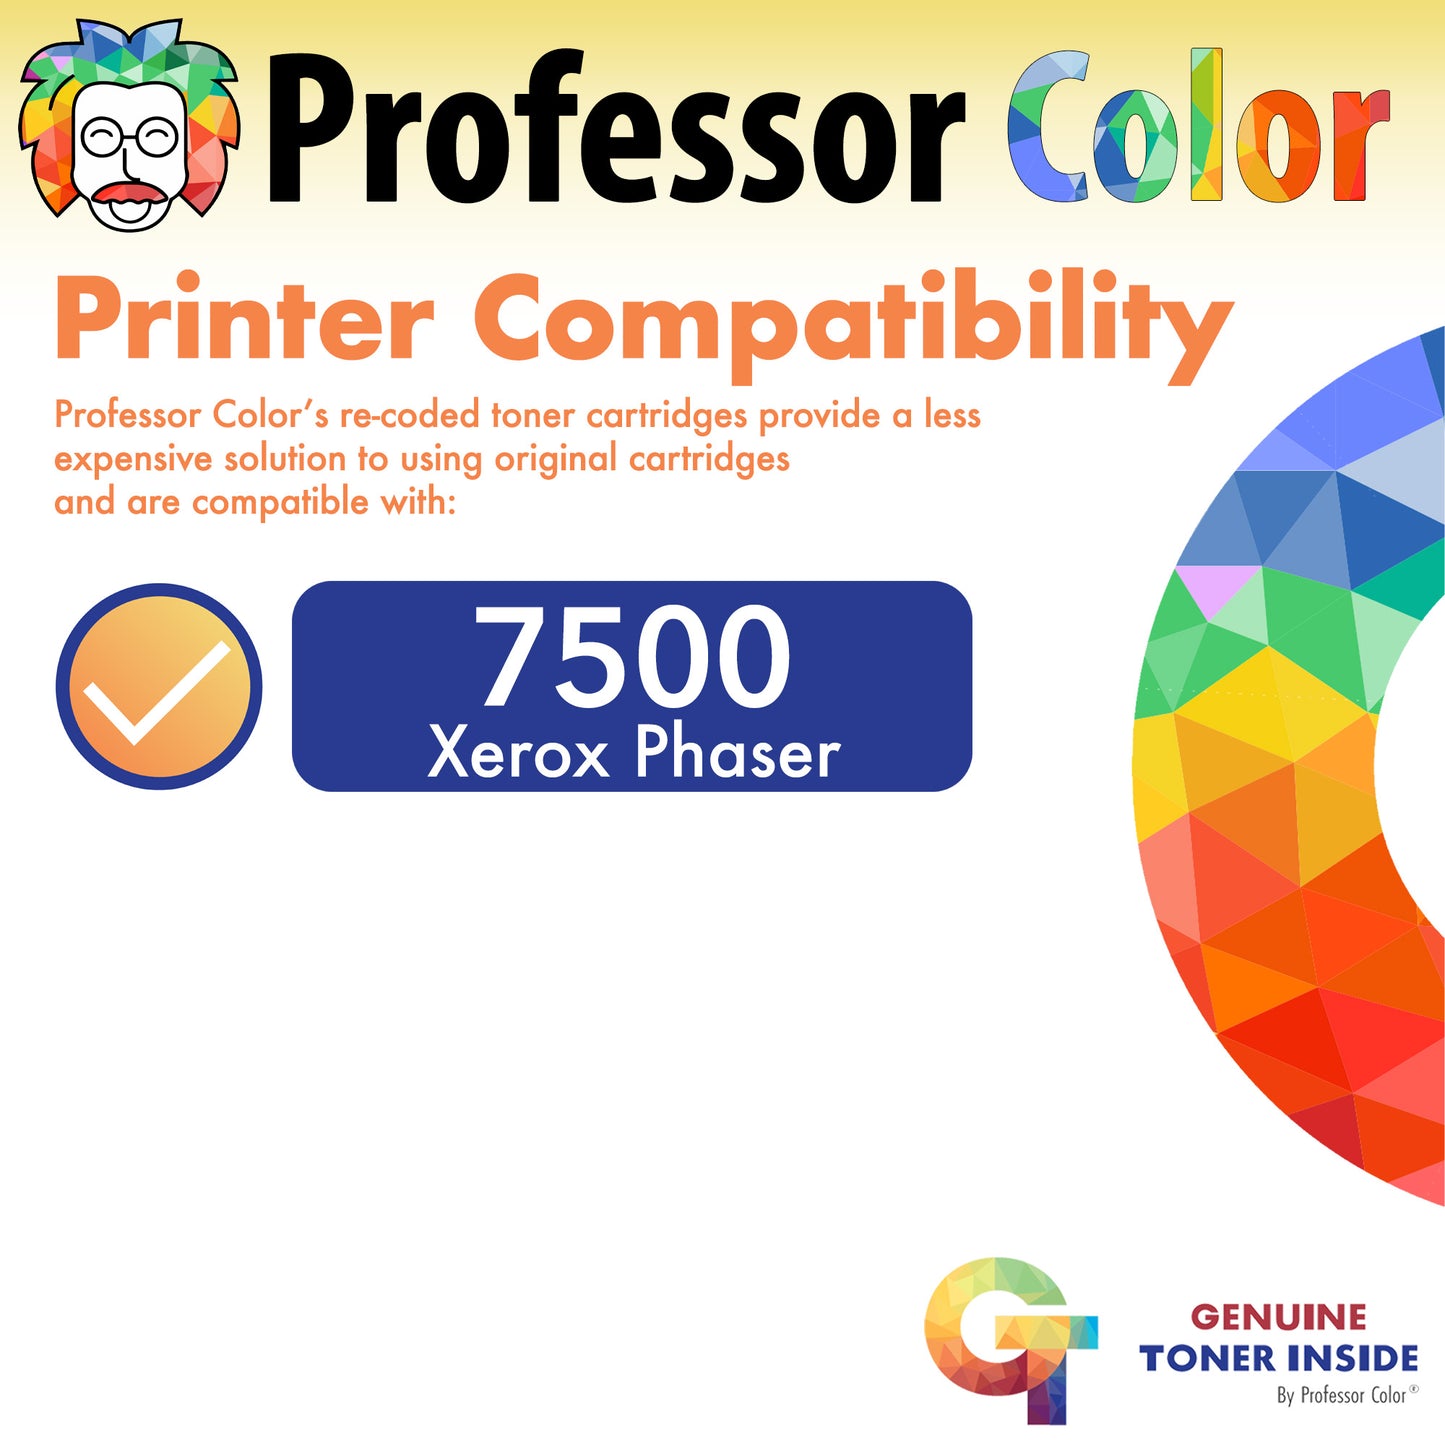 High Yield Cyan Toner - Professor Color